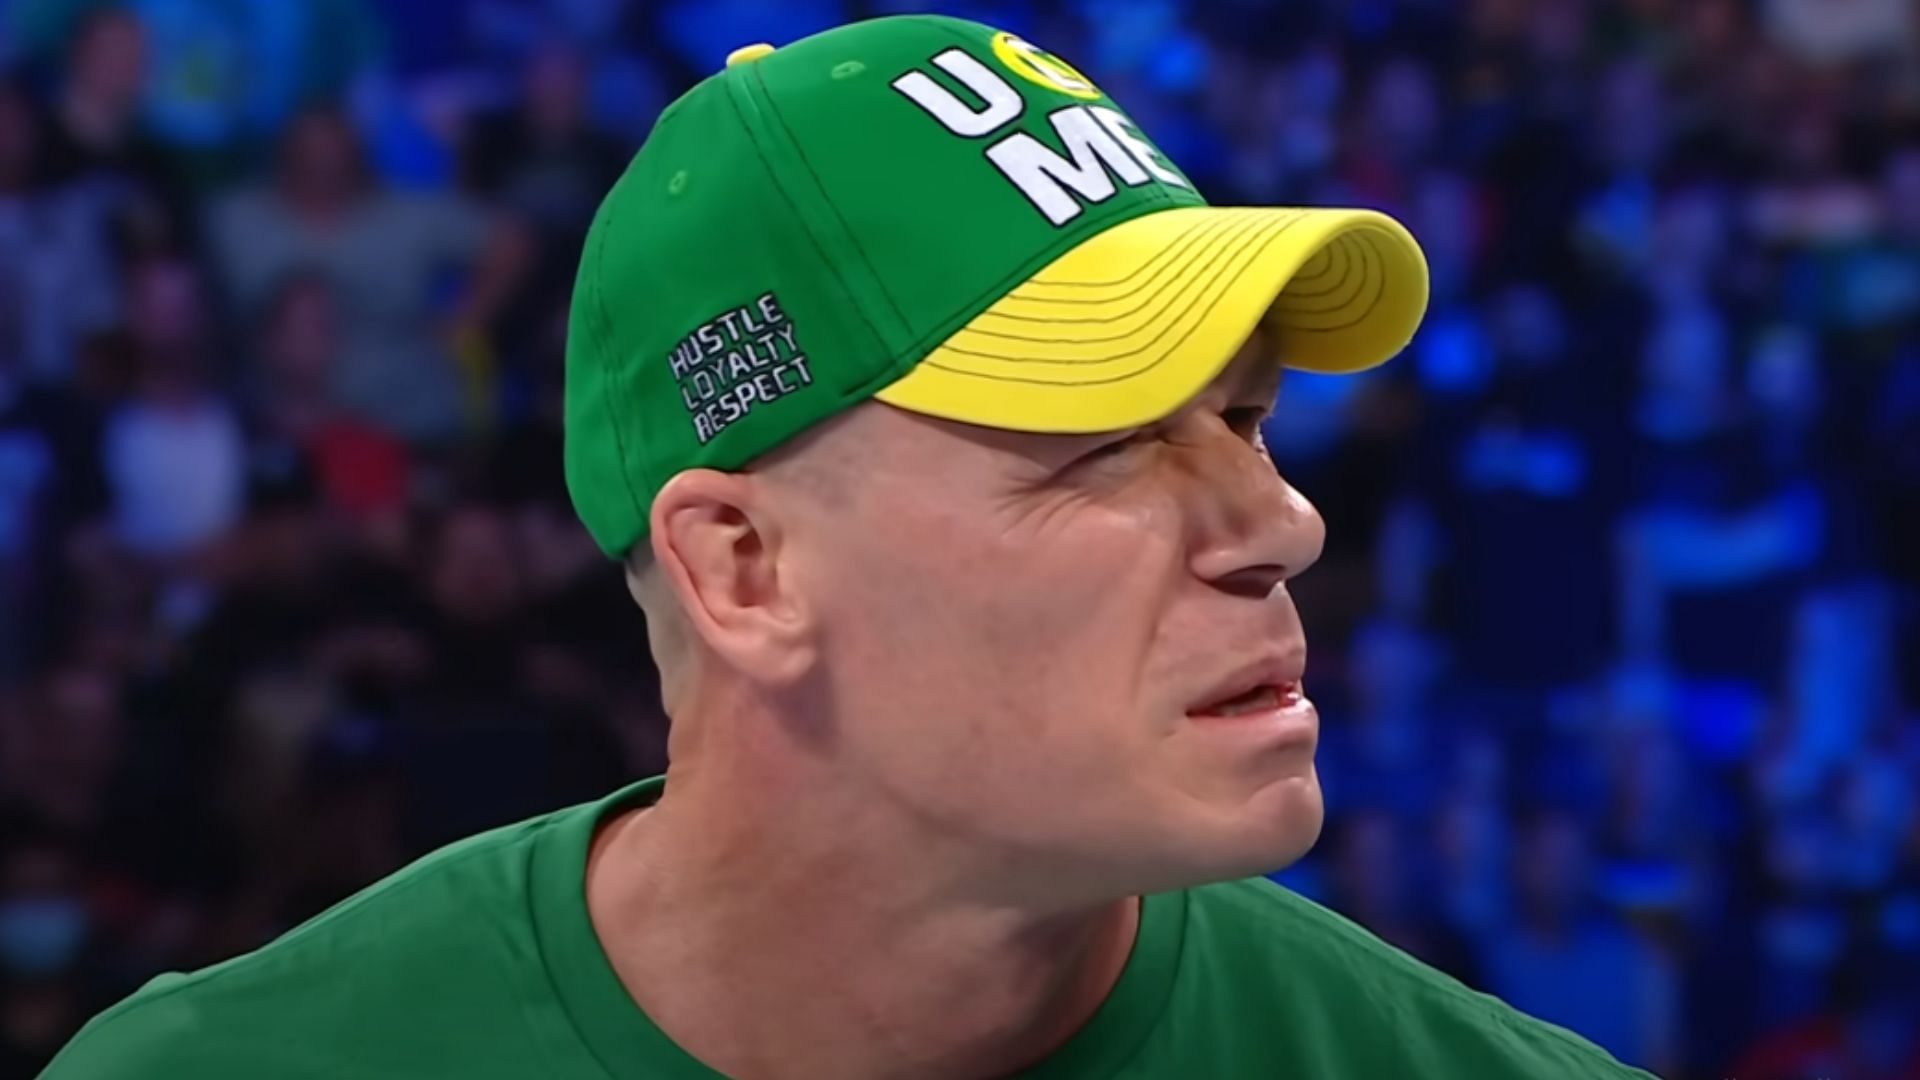 John Cena will return to action this week.